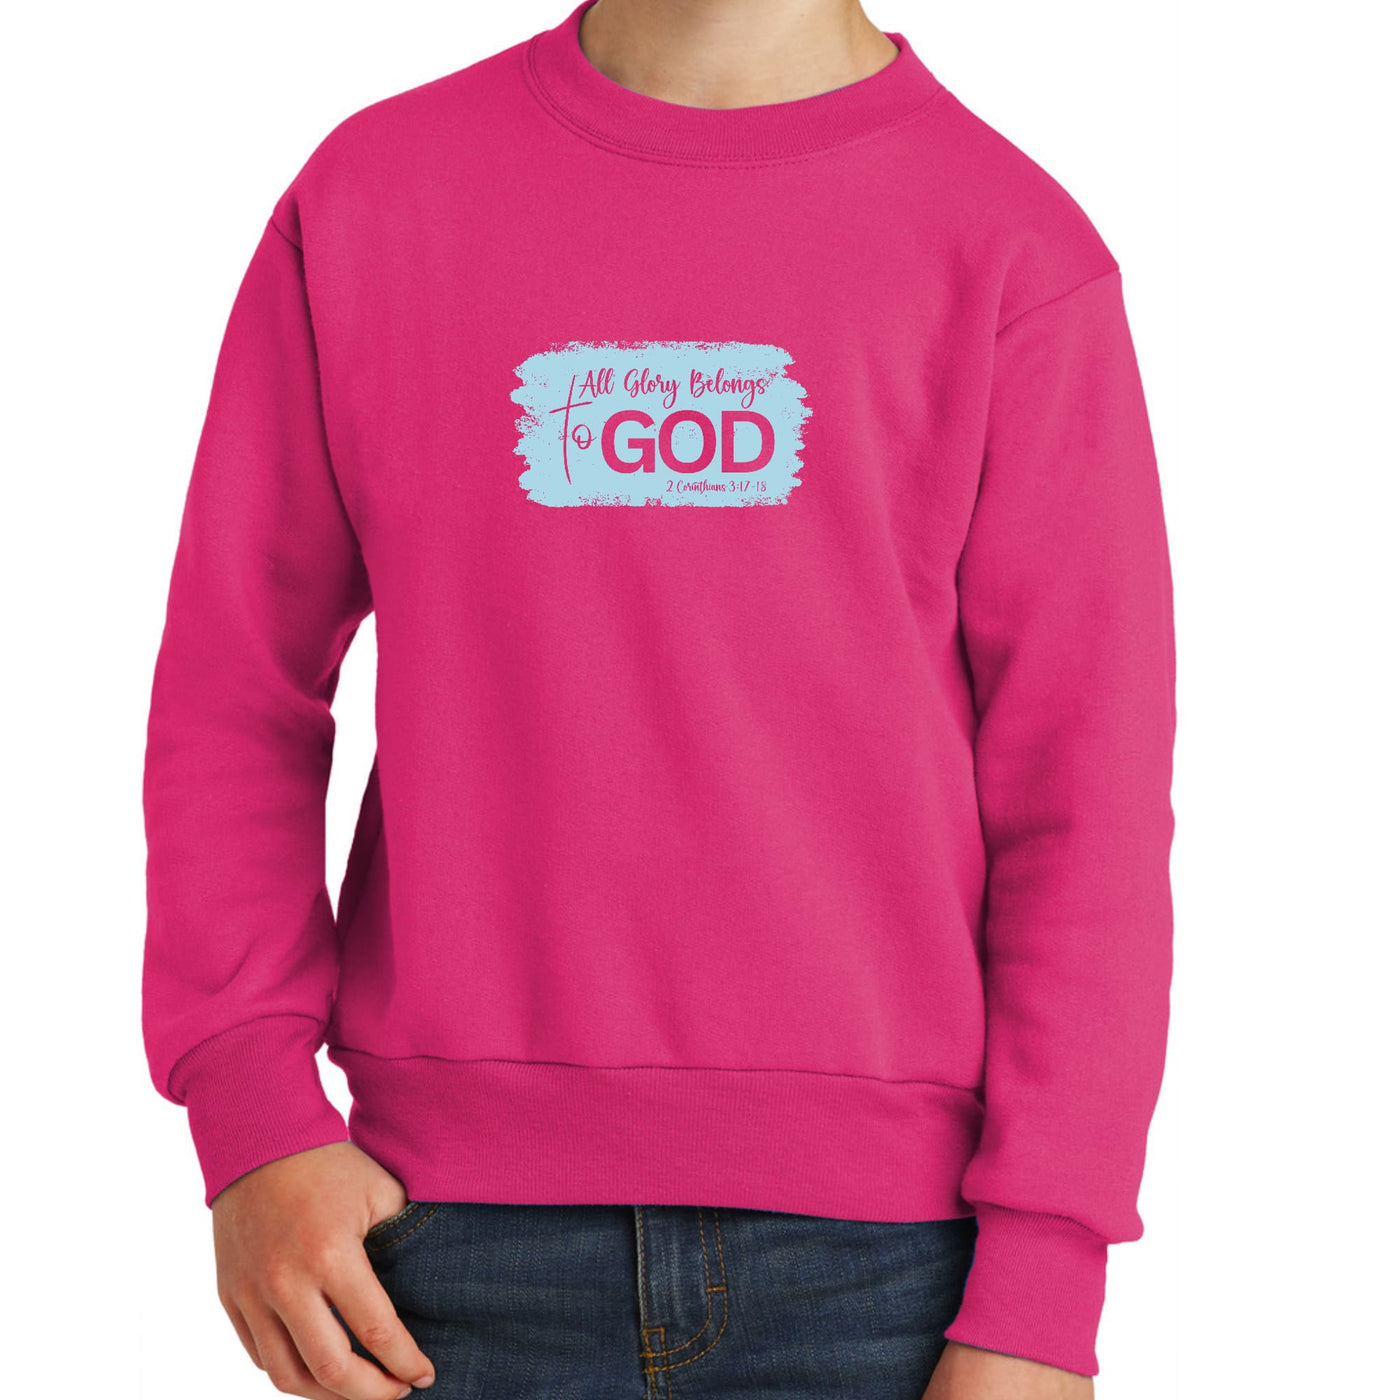 Youth Graphic Sweatshirt All Glory Belongs To God Light Blue - Youth